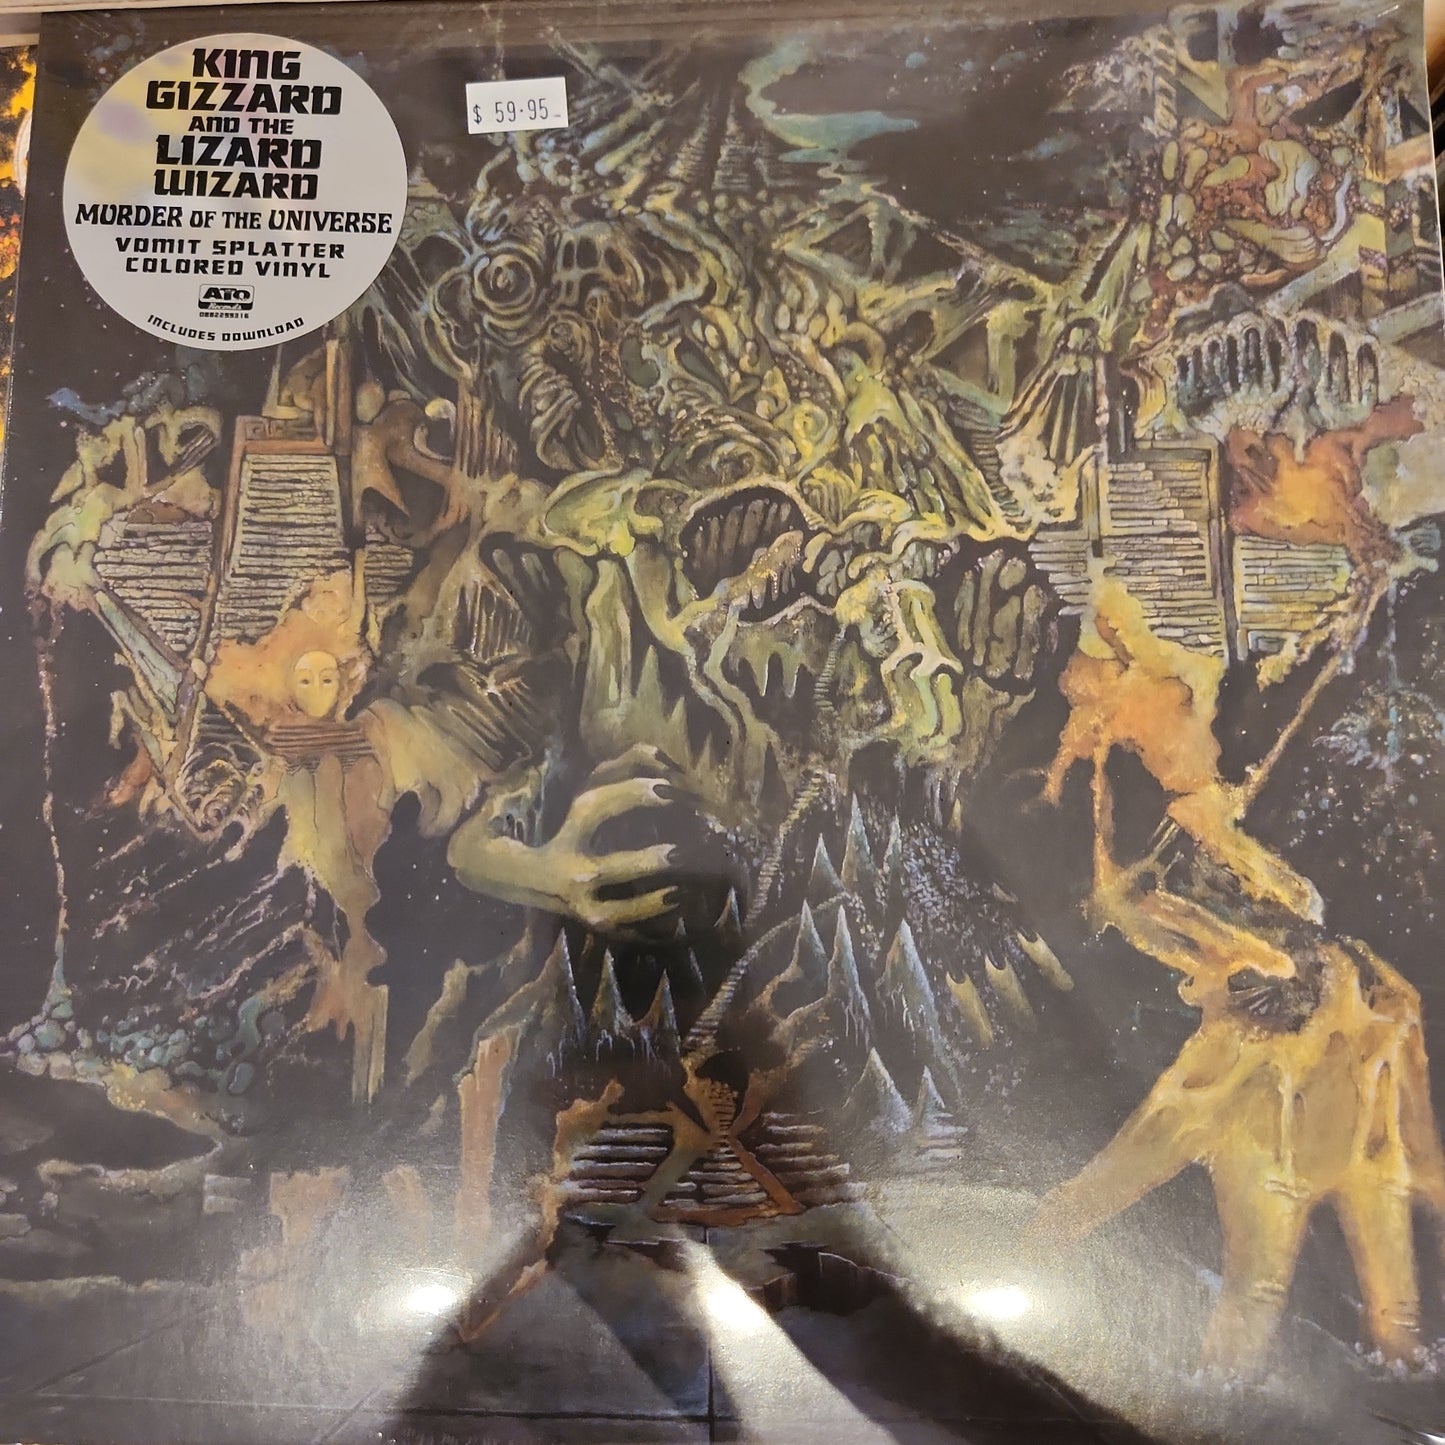 King Gizzard & the Lizard Wizard - Murder on the universe- Vinyl LP